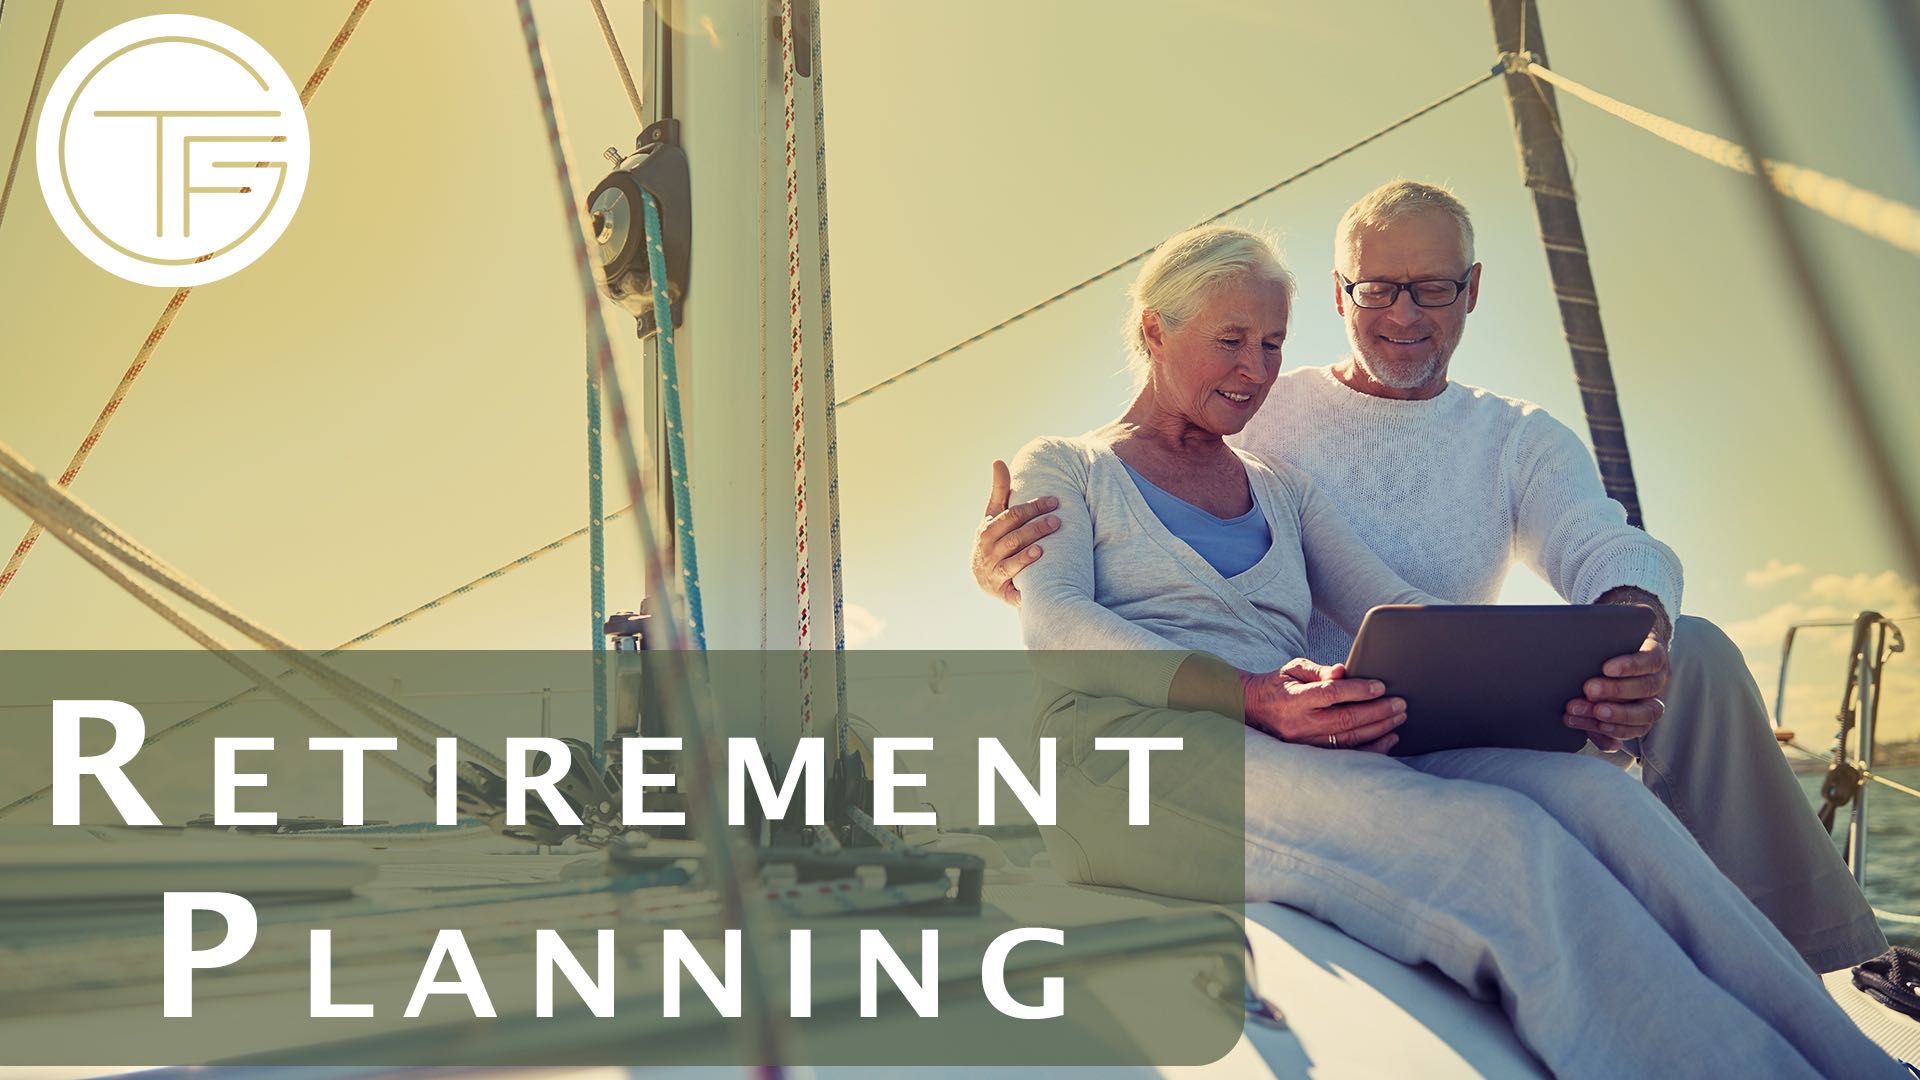 TFG Retirement Planning Services